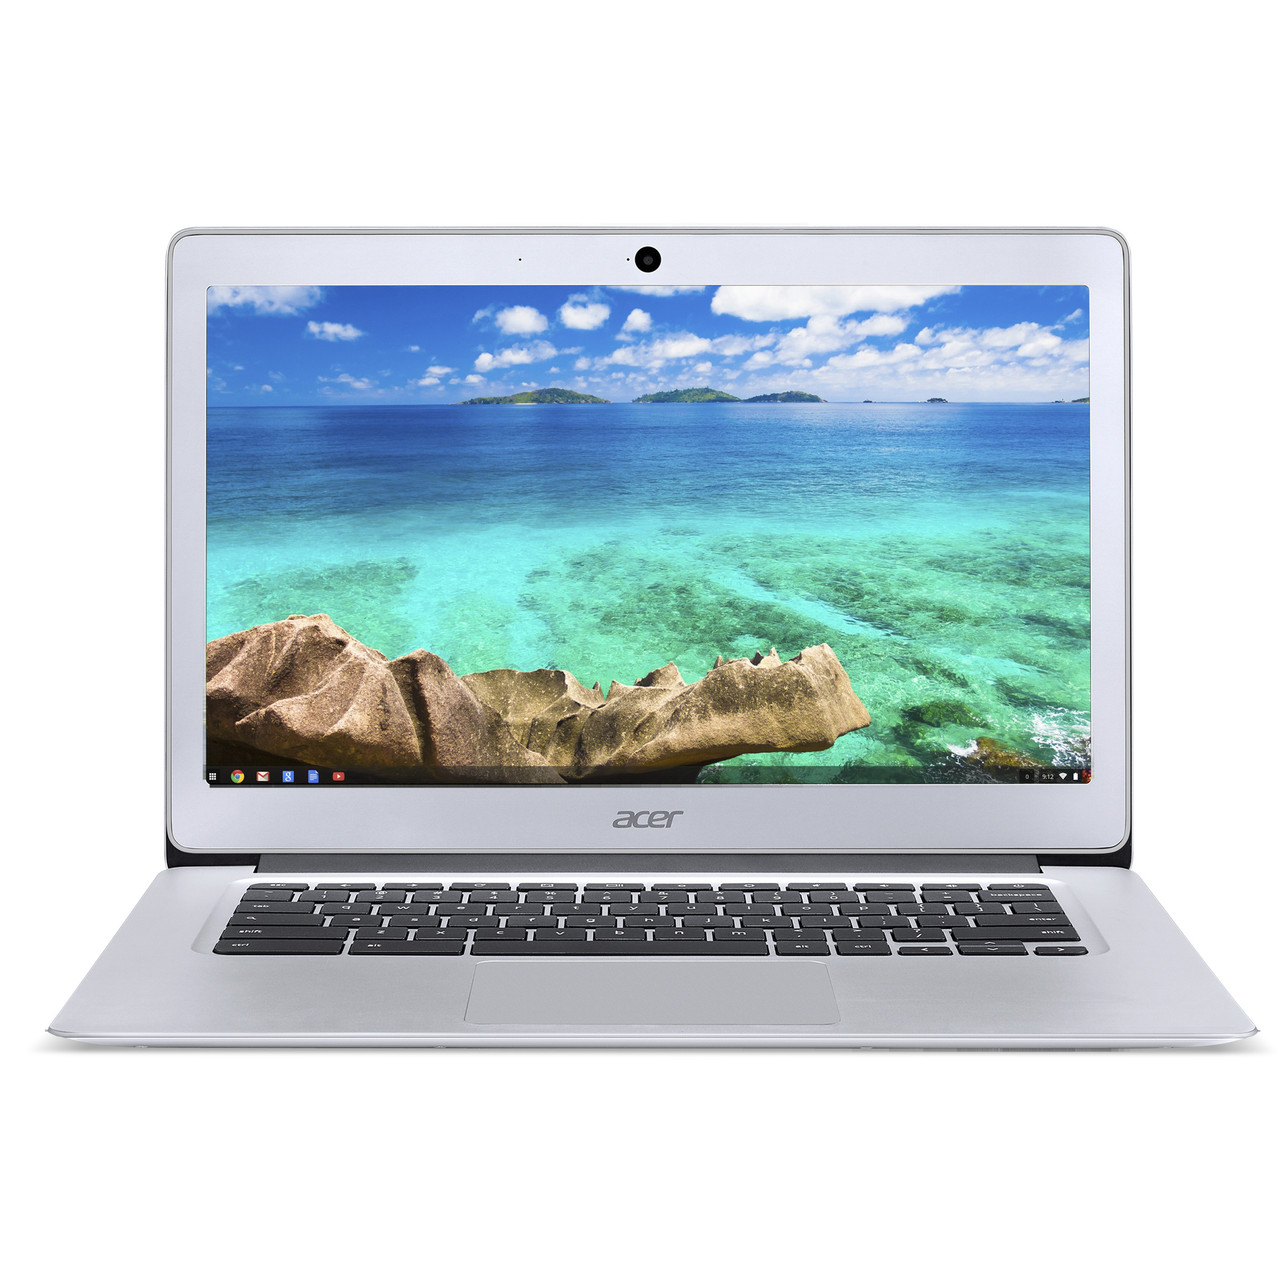 Vertrouwen bibliothecaris Lezen Acer Chromebook 14" Display IPS Screen 4GB Ram 32GB Flash ChromeOS Laptop